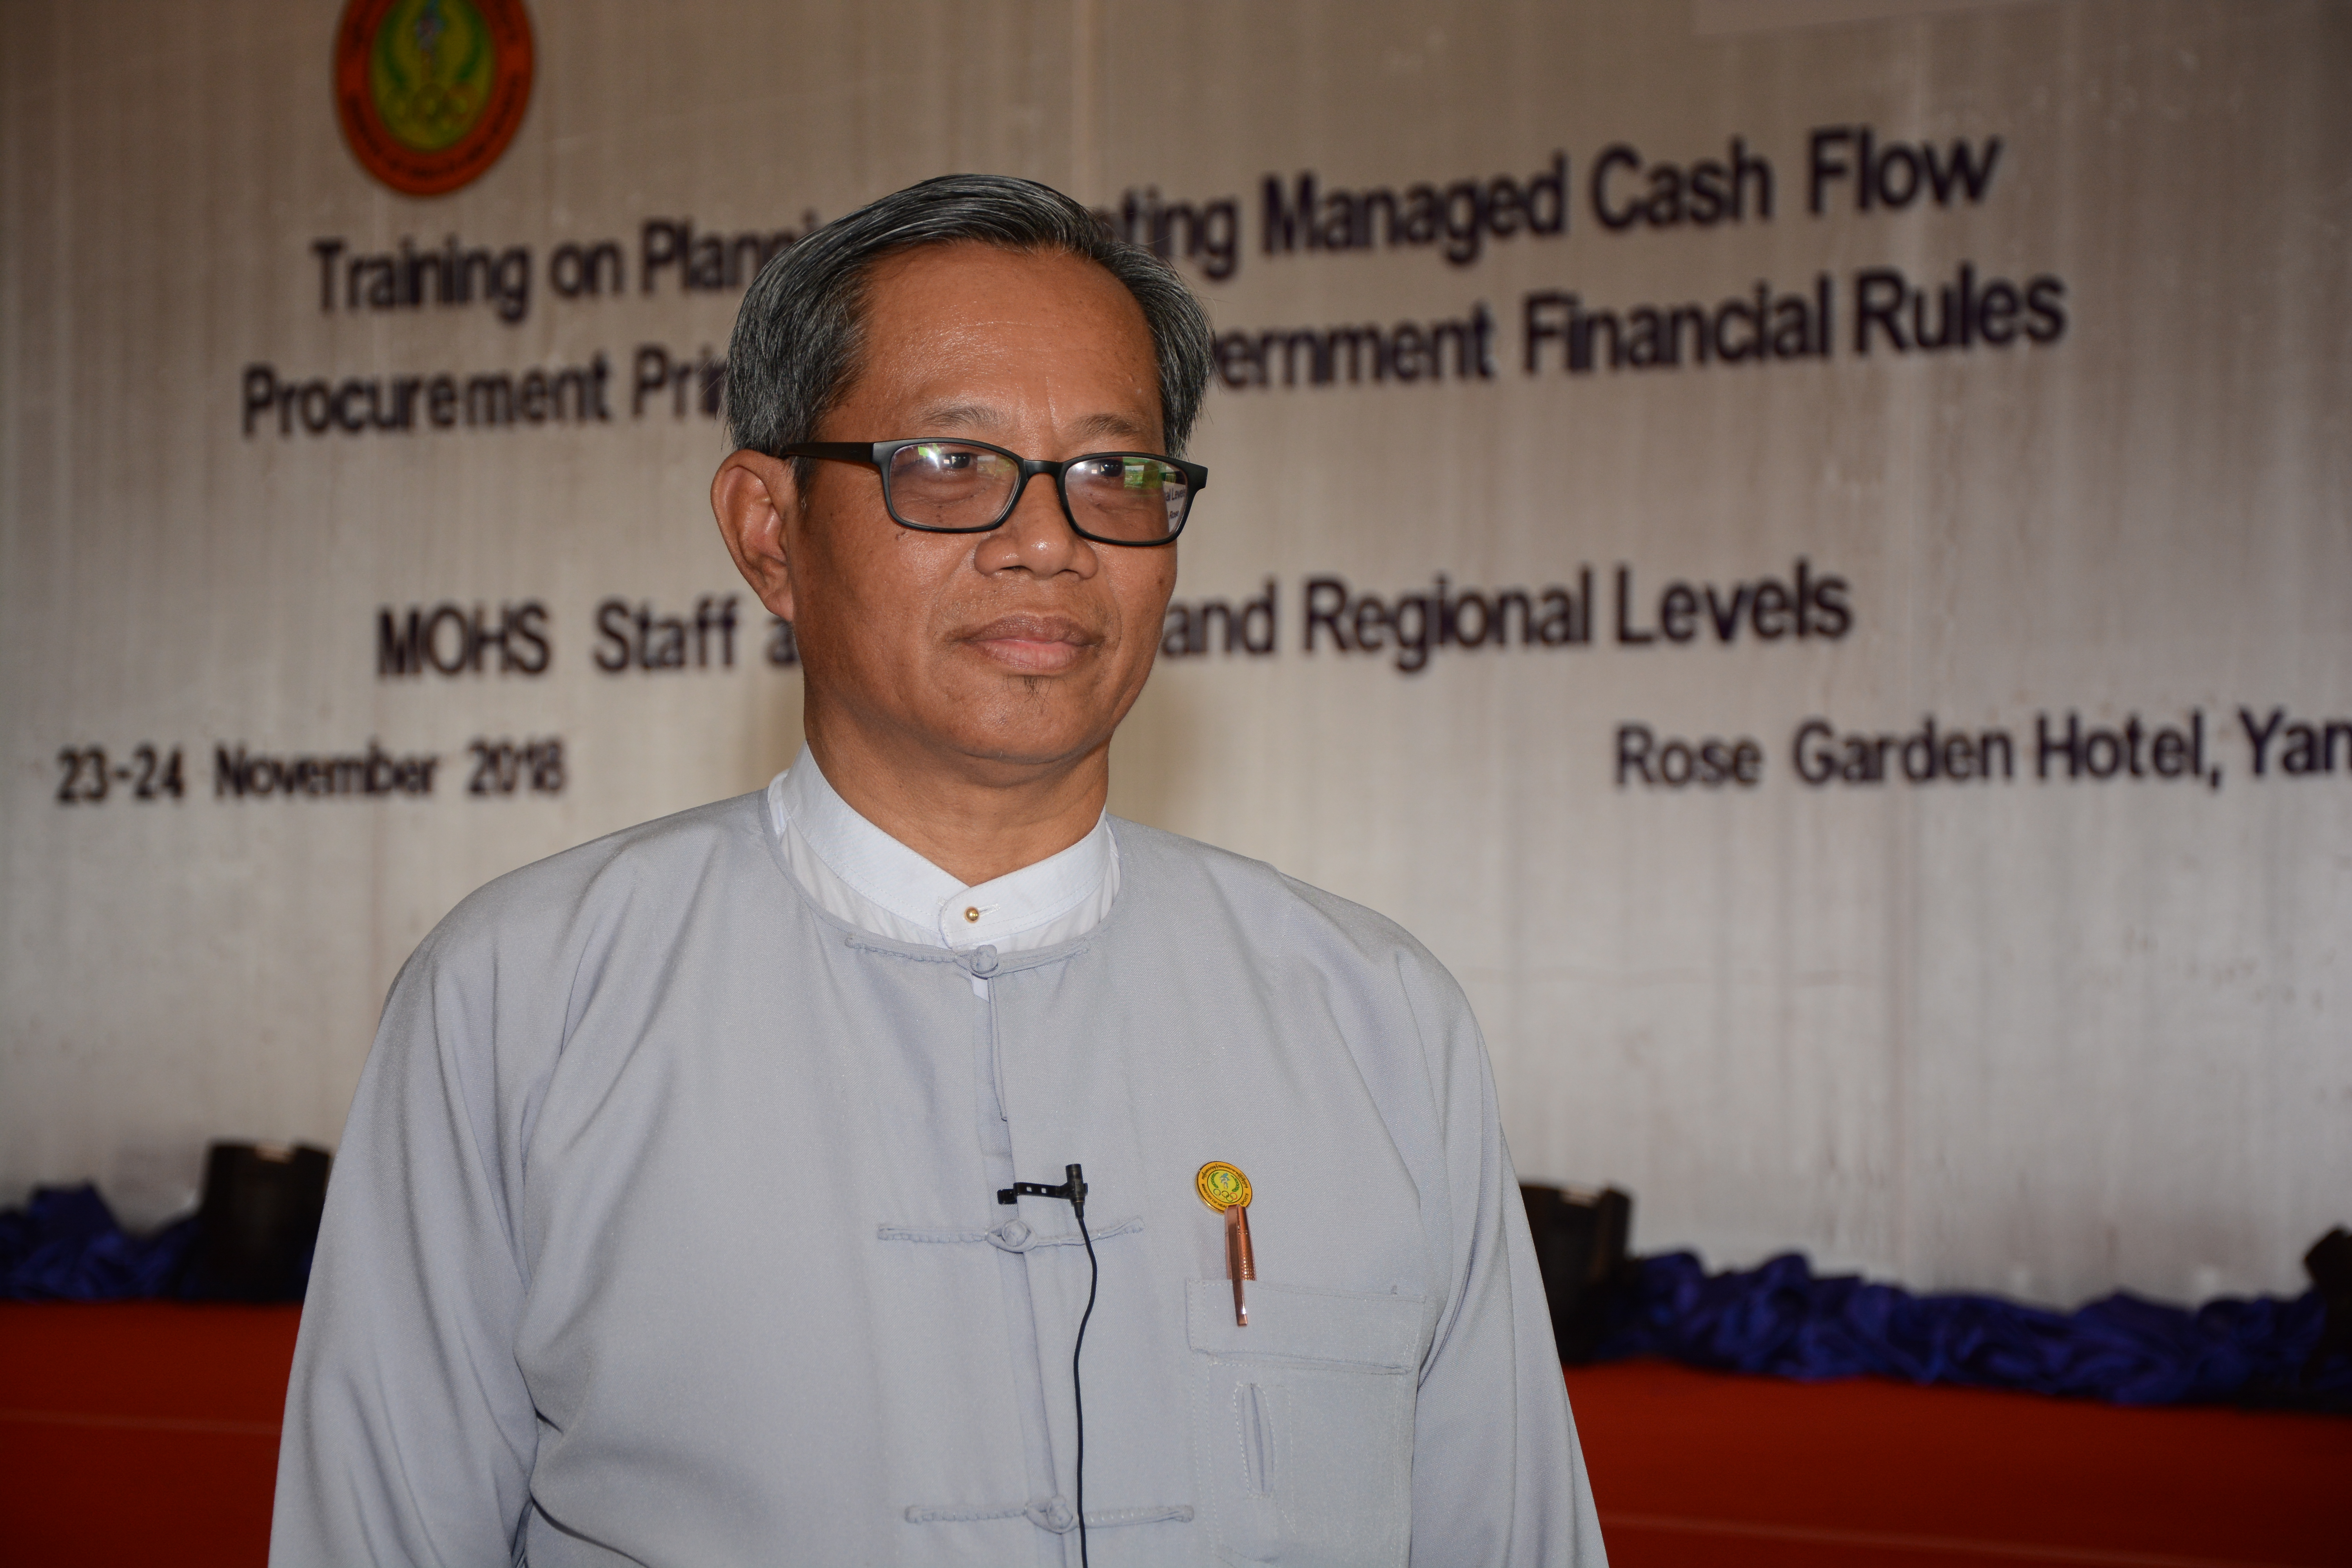 Dr Htay Lwin, Deputy Regional Public Health Director, Yangon Region Health Department, MOHS